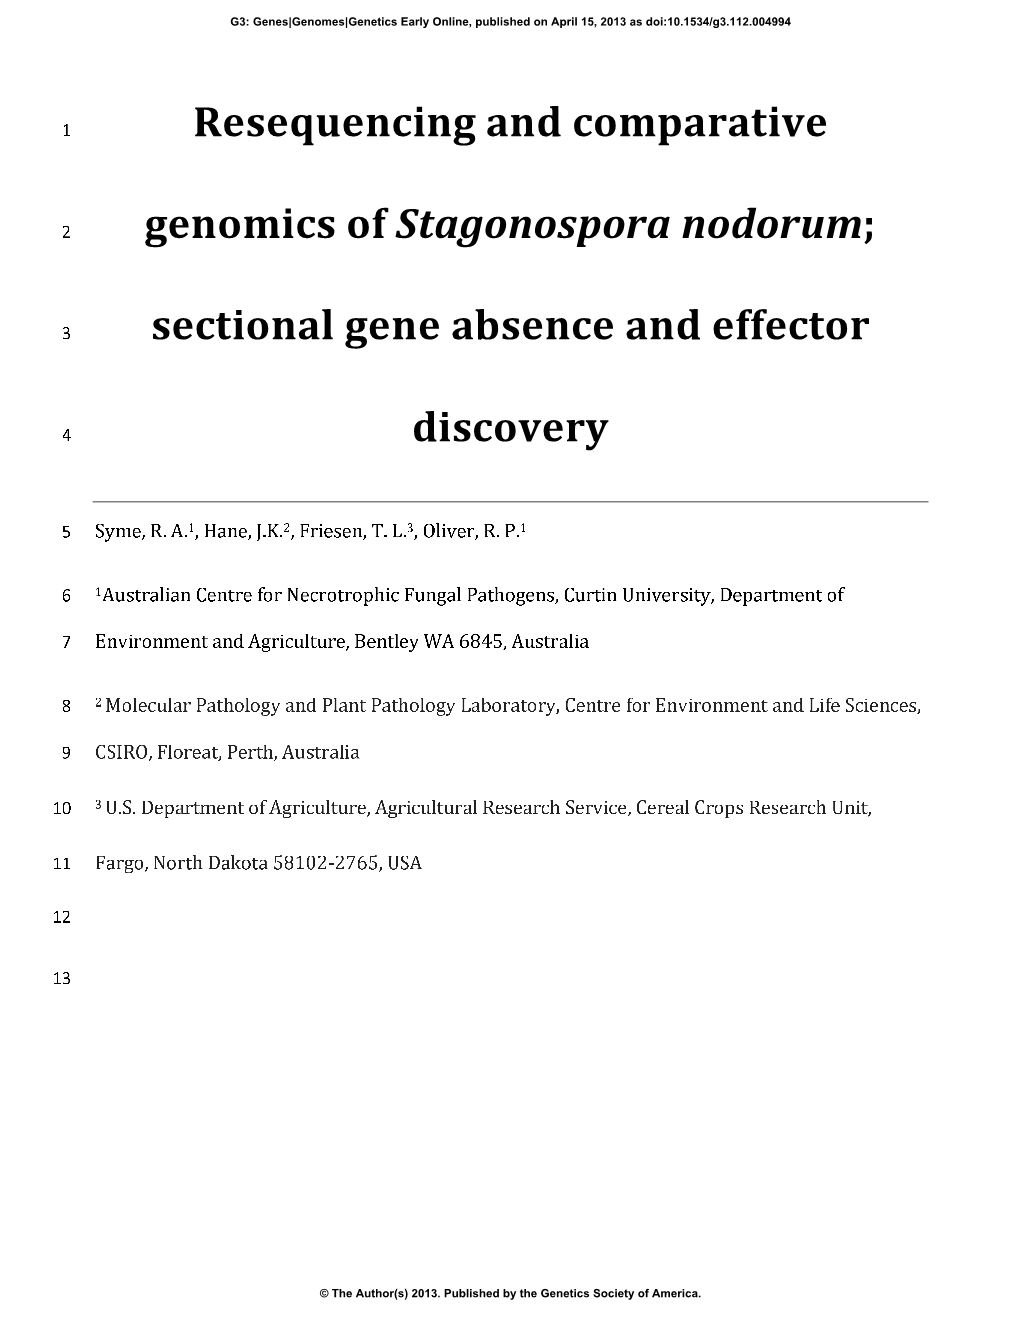 Resequencing and Comparative Genomics of Stagonospora Nodorum